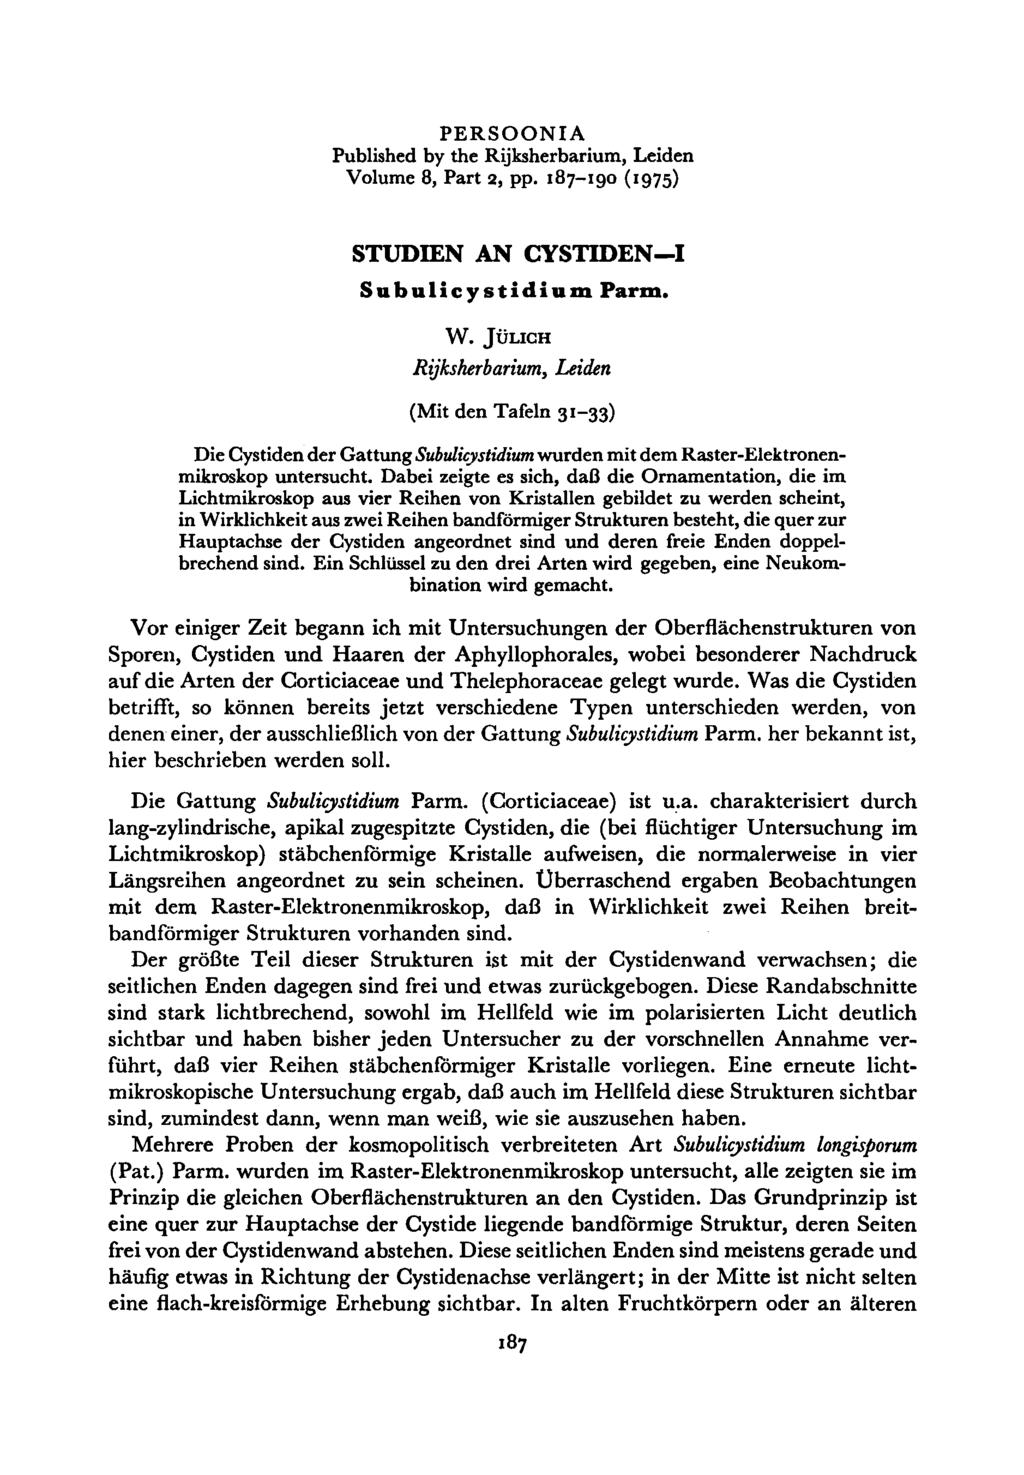 PERSOONIA Published by the Rijksherbarium, Leiden Volume 8, Part 2, pp. 187-190 (1975) Studien an Cystiden-I. Subulicystidium Parm. W.